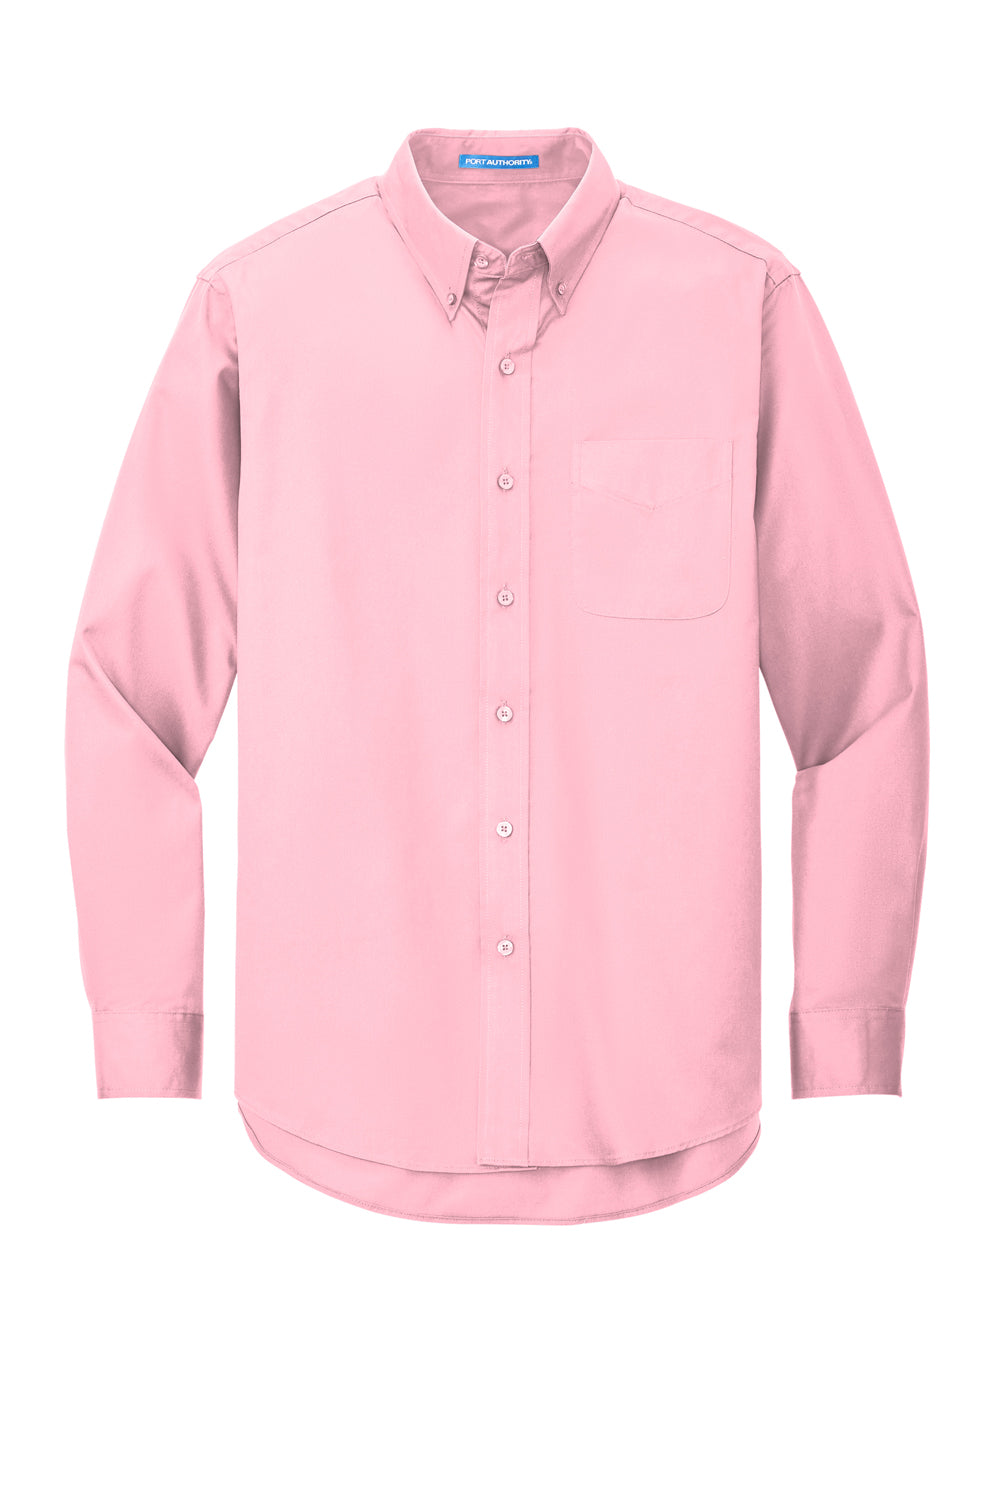 Sweatshirt A.L.C. Pink size 6 US in Cotton - 39610362